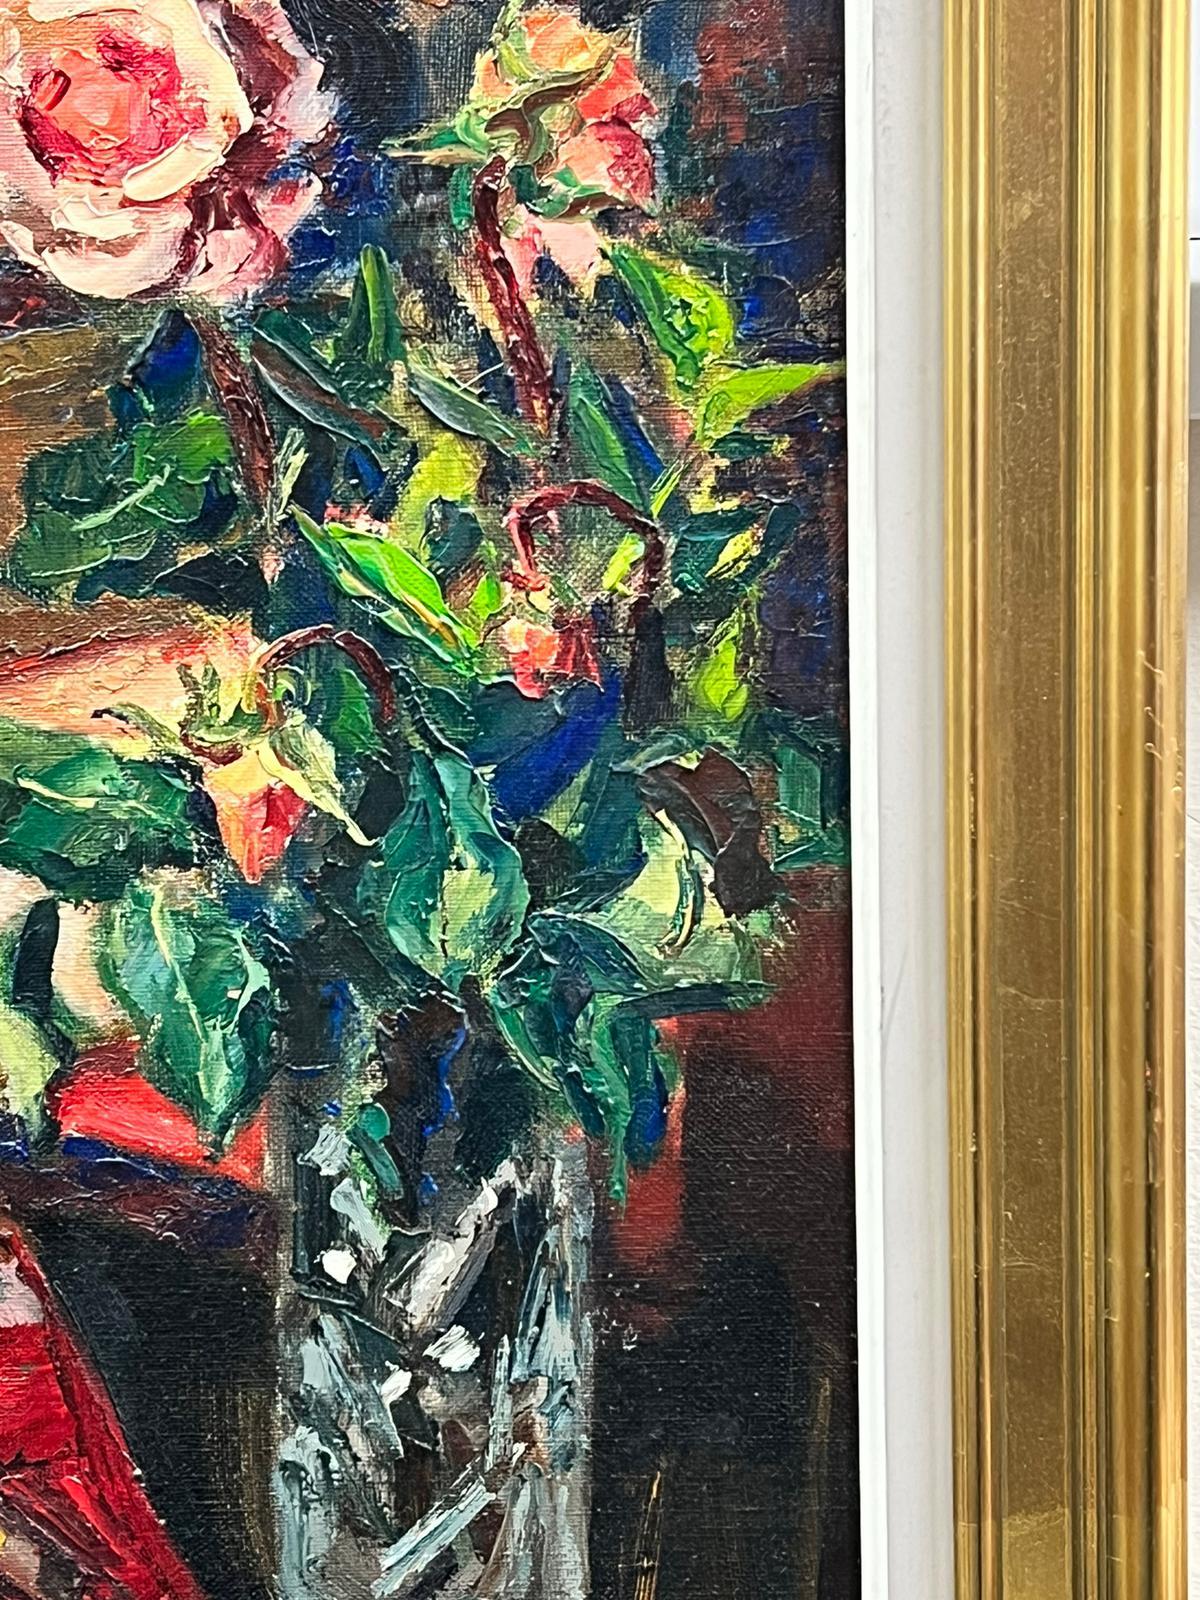 20th Century French Still Life Flowers & Artists Studio Interior original oil - Post-Impressionist Painting by Josine Vignon